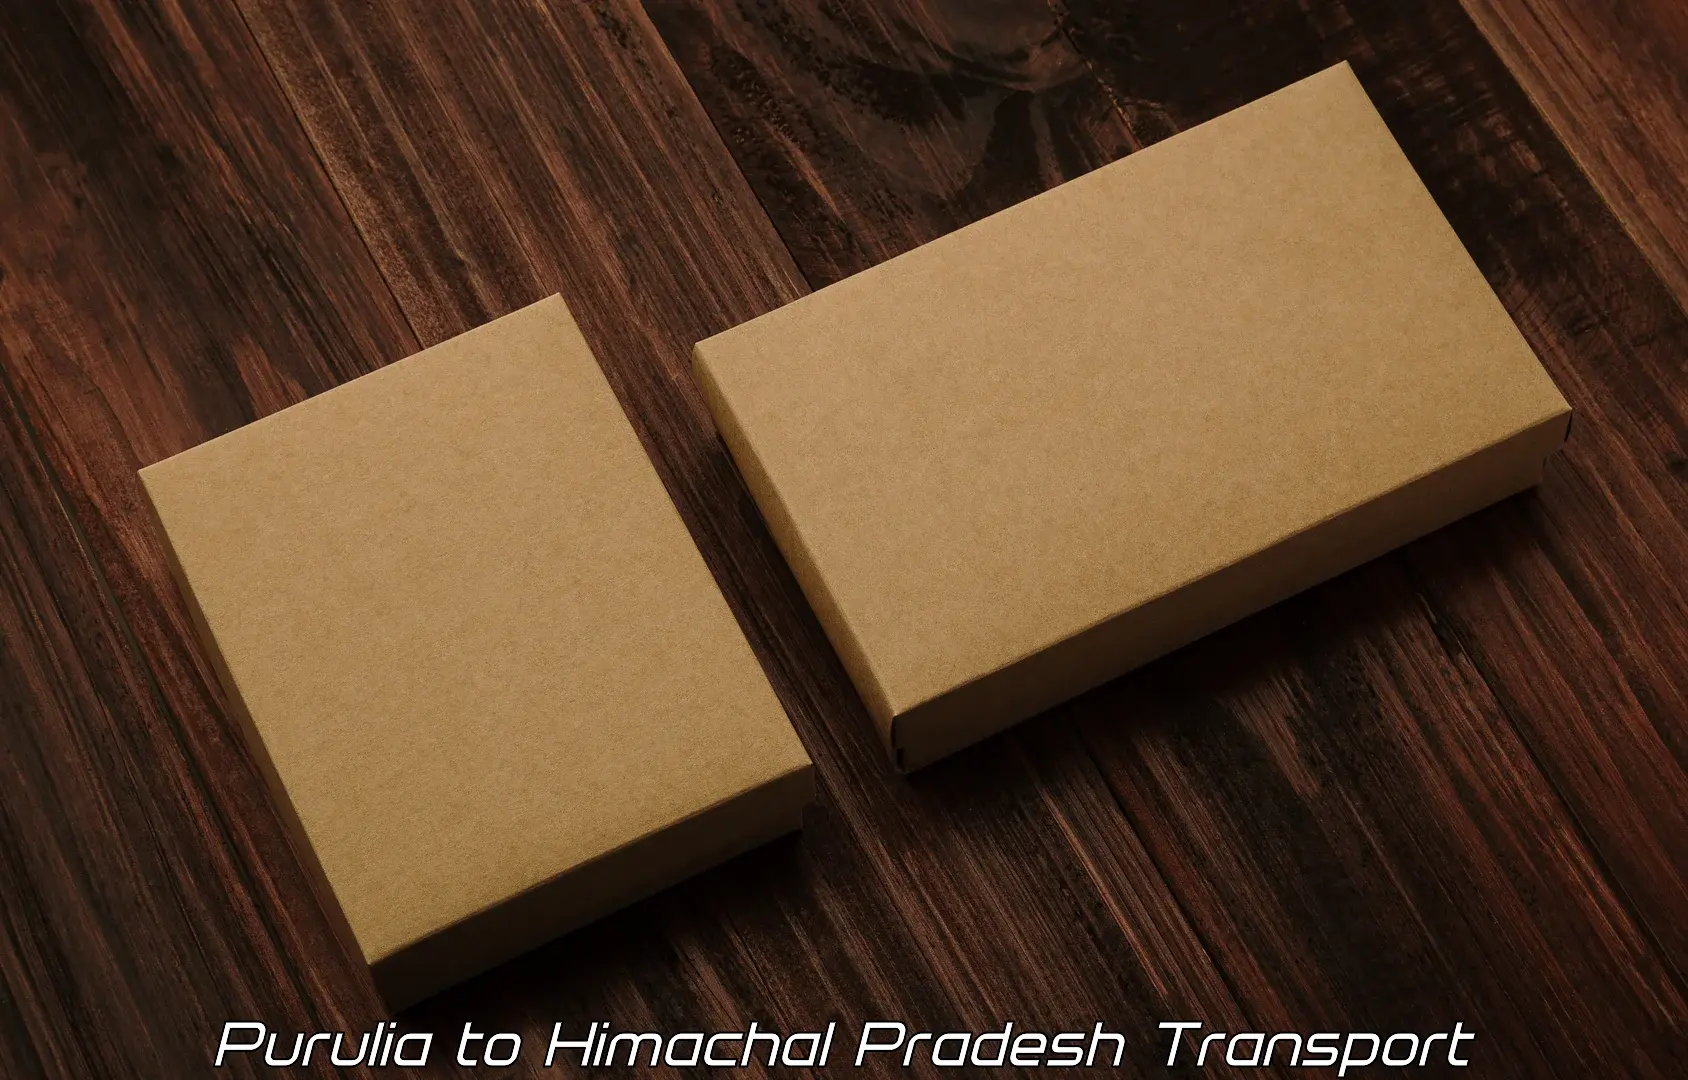 Daily parcel service transport Purulia to Sandhol